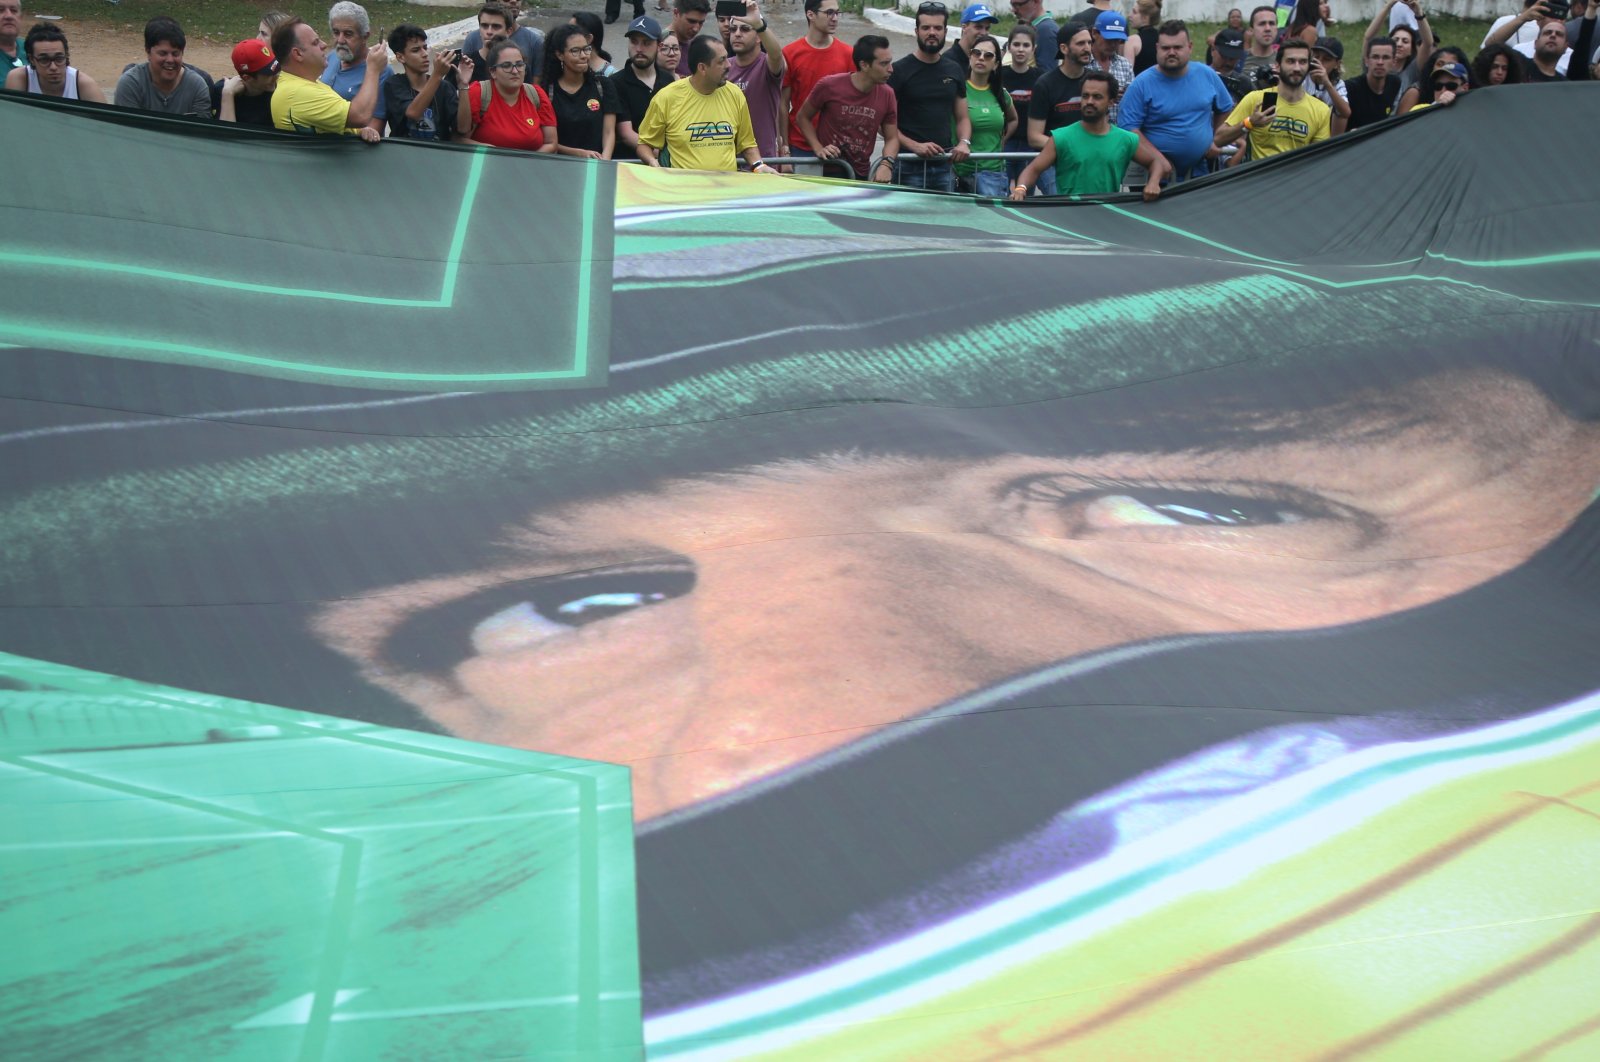 Fans of Ayrton Senna with a flag of the three times F1 World Champion, Sao Paulo, Brazil, Nov. 9, 2019.